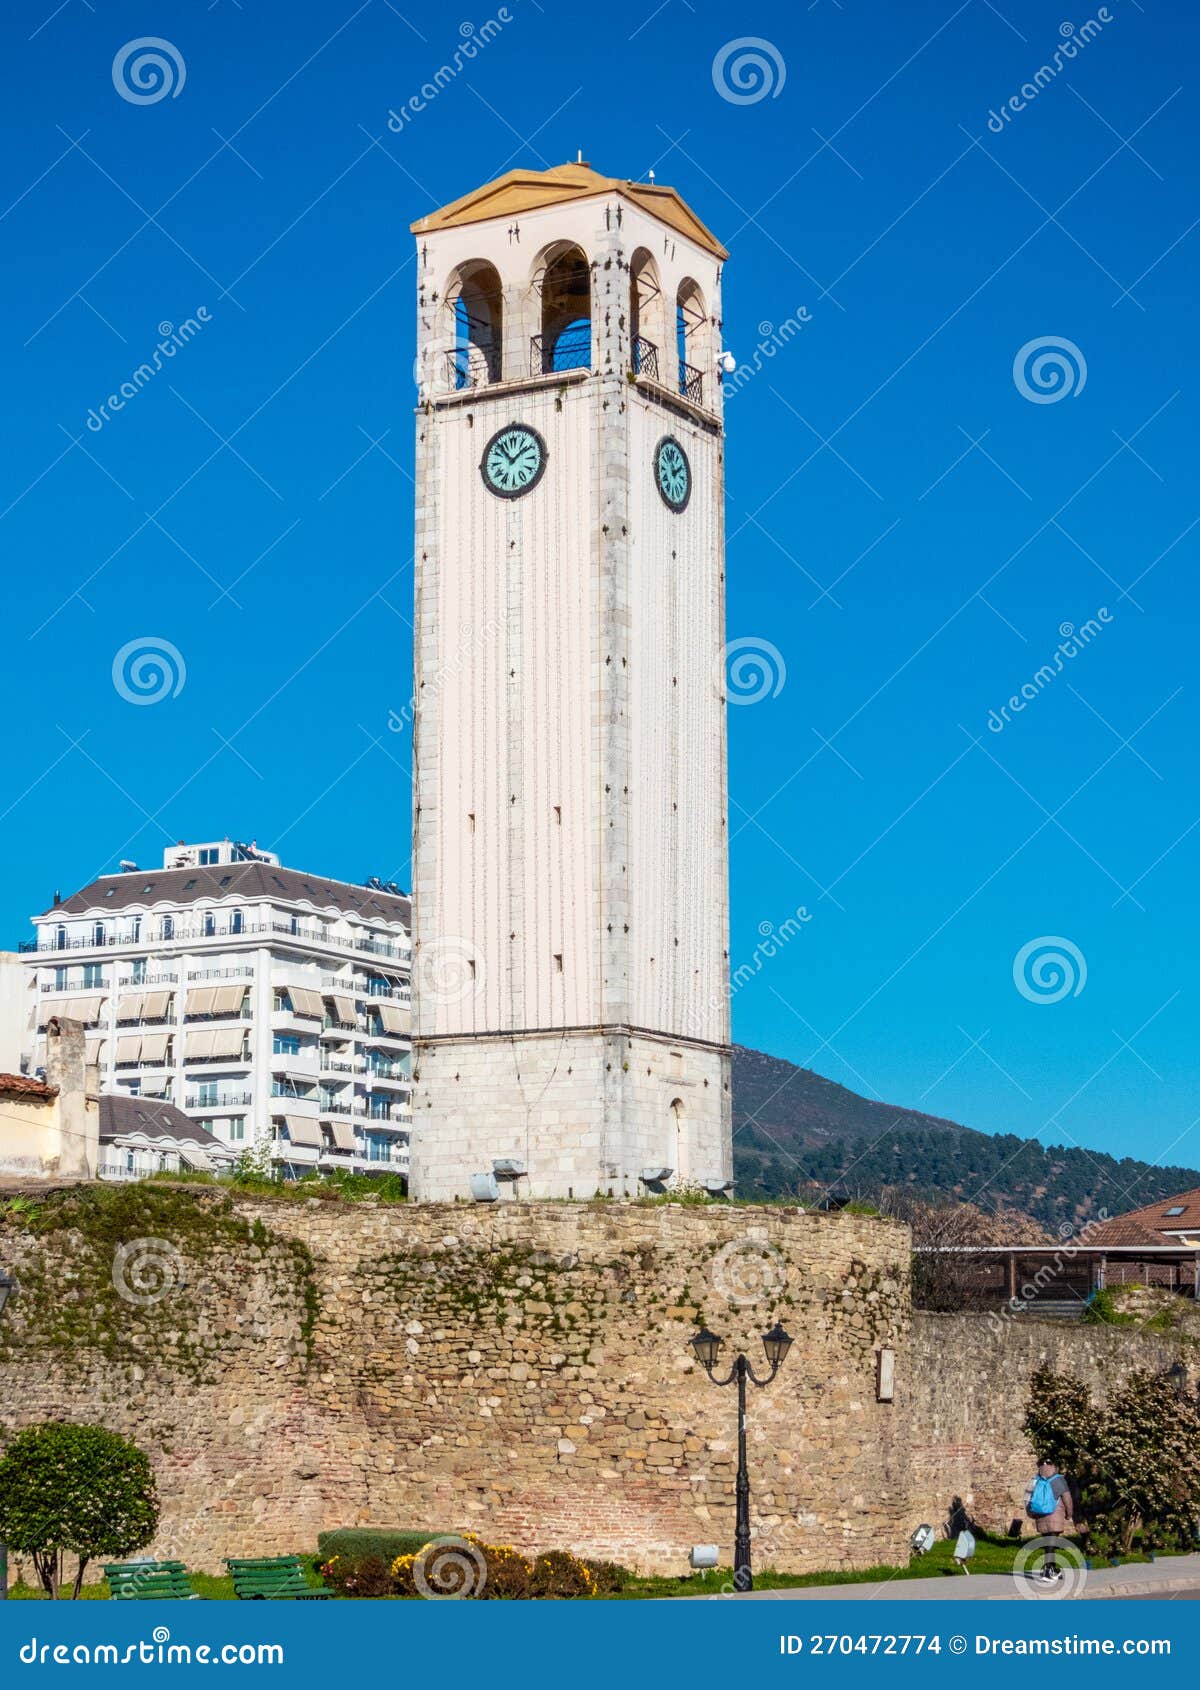 clock tower in elbasan, albania